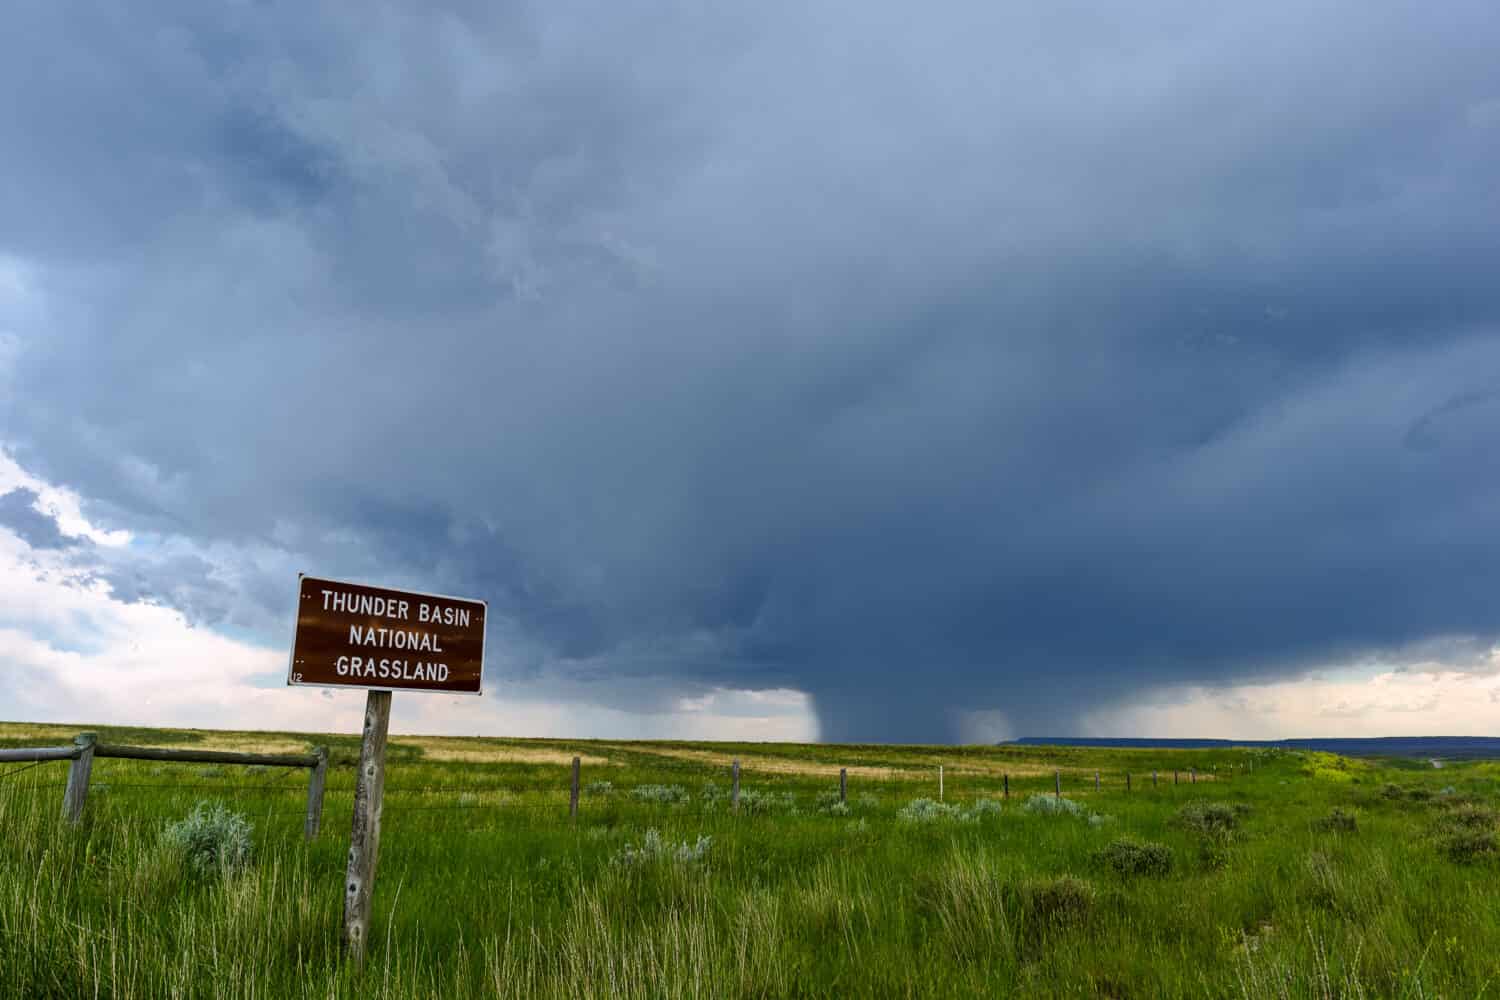 Thunderstorm over the Thunder Basin National Grassland, Wyoming.